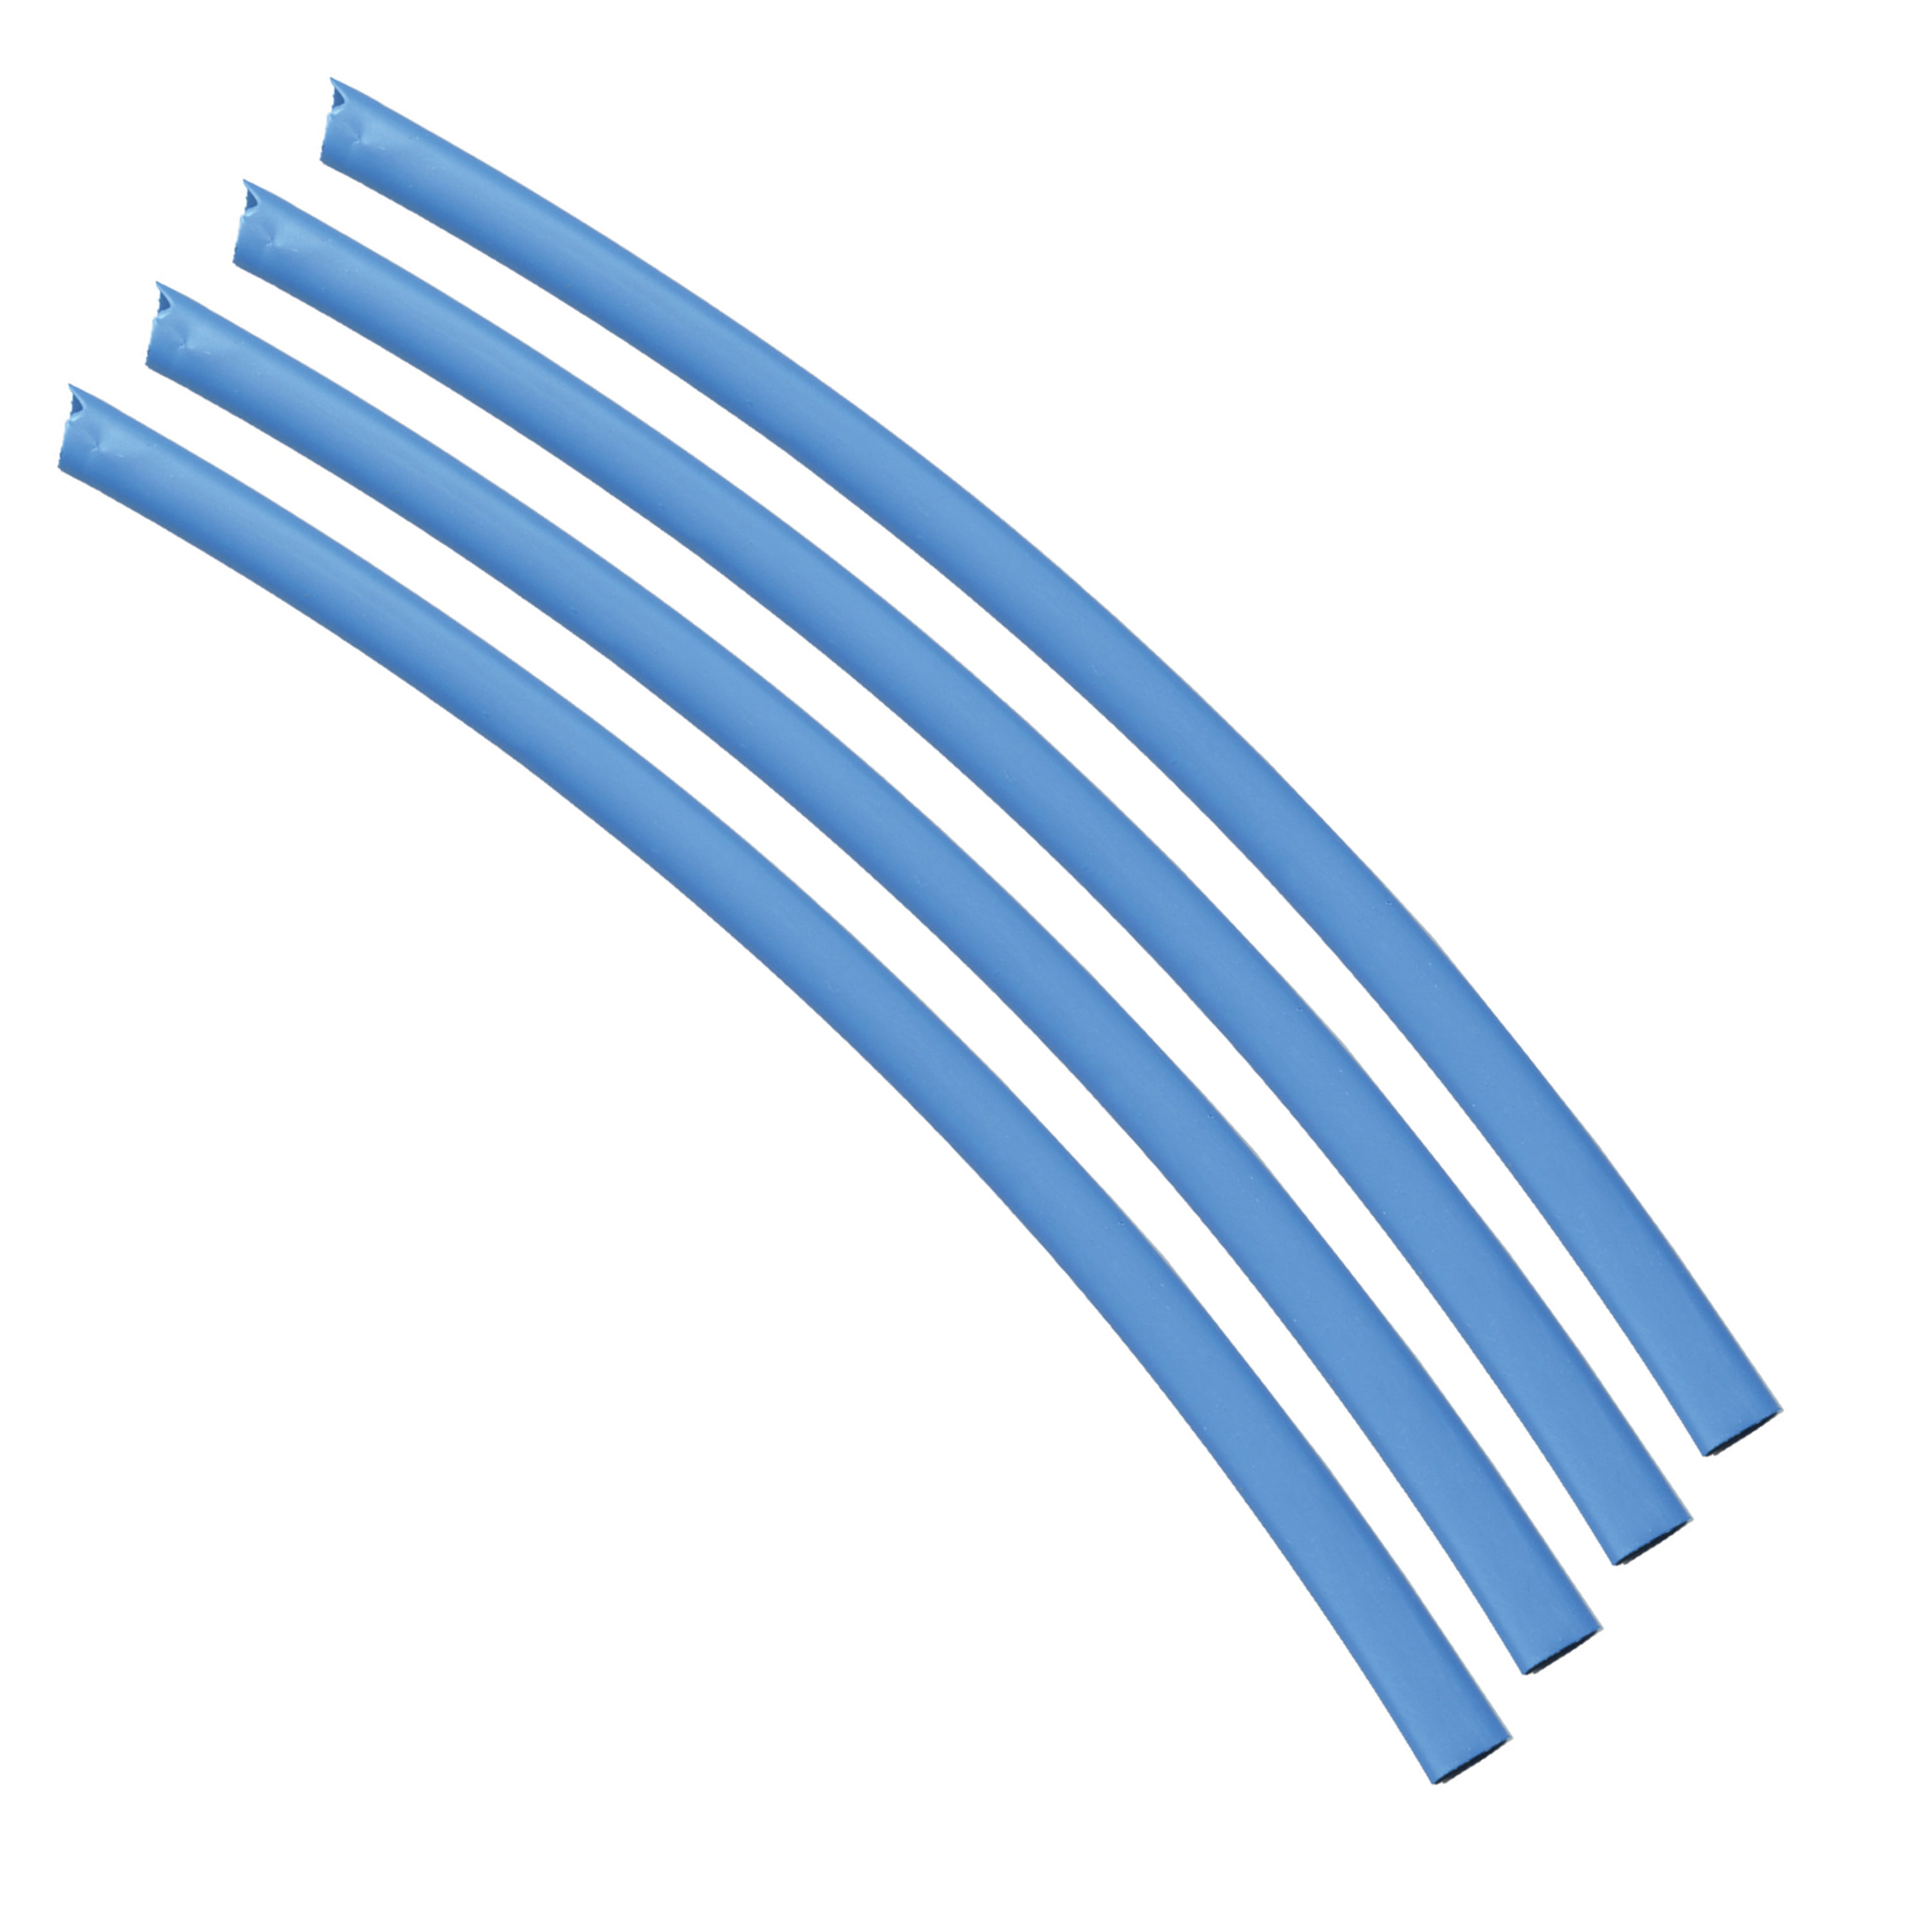 Flexible Thin Single Wall Non-Adhesive Heat Shrink Tubing 2:1 Blue 1/8